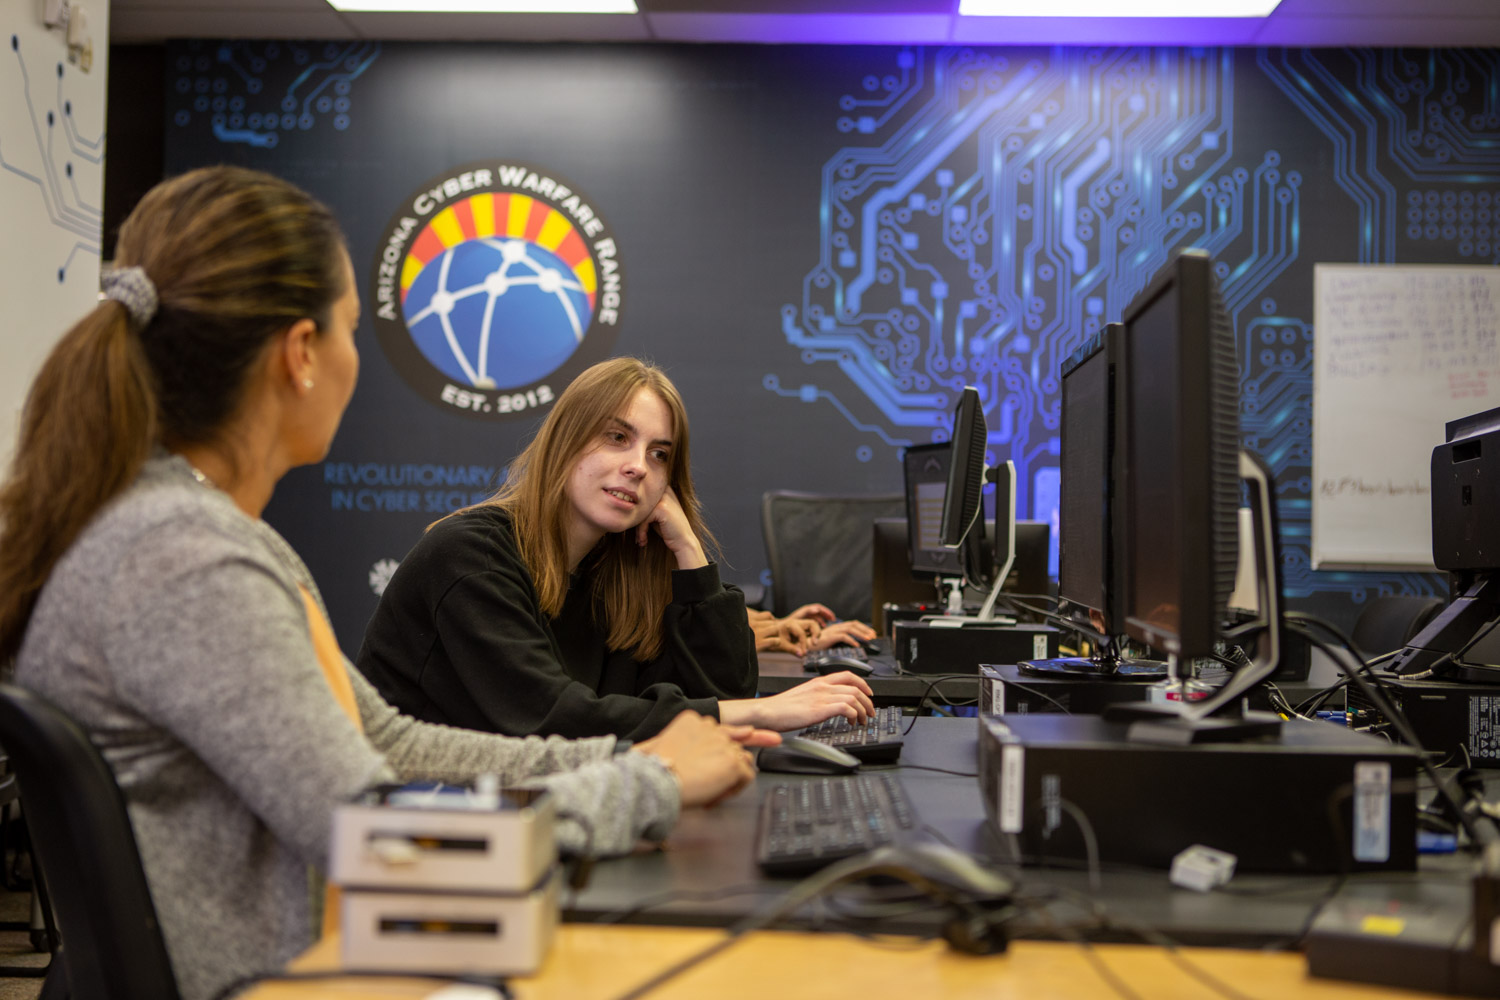 students sitting at computers in cyberwarfare range